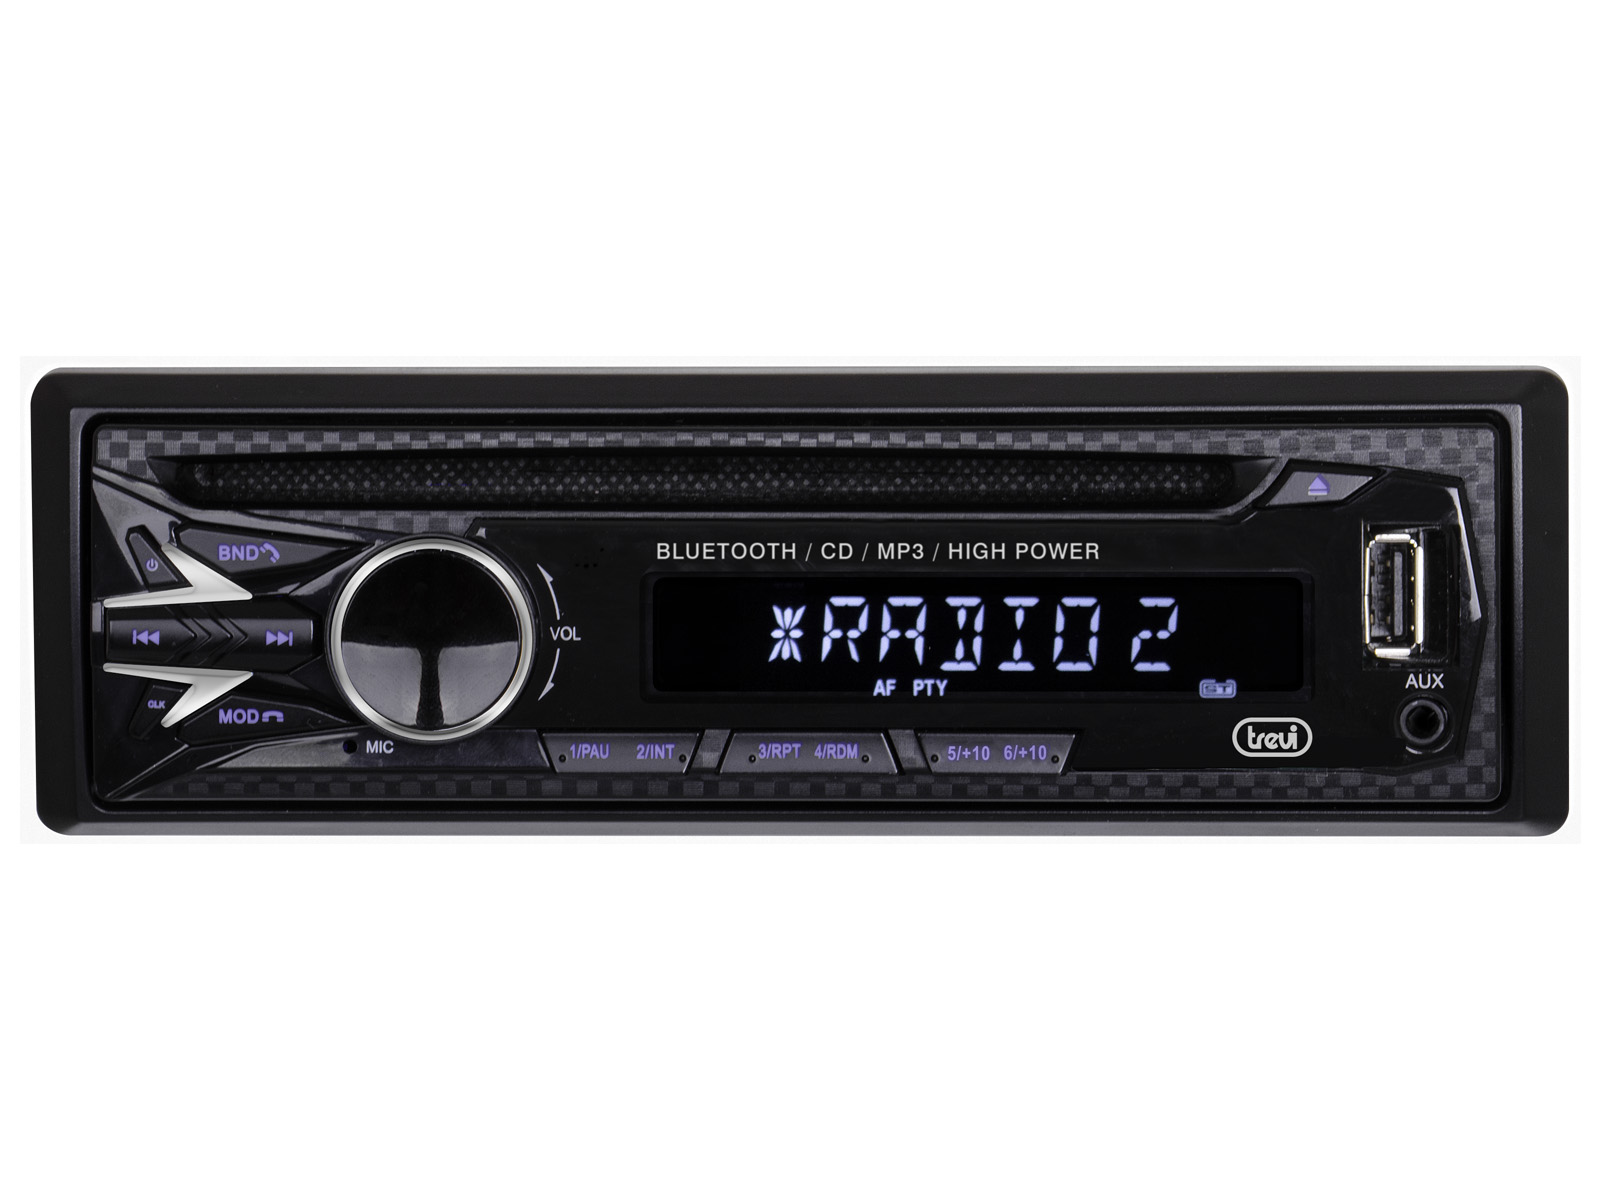 AUTORADIO STEREO BLUETOOTH CD USB AUX-IN TREVI XCD 5770 USB